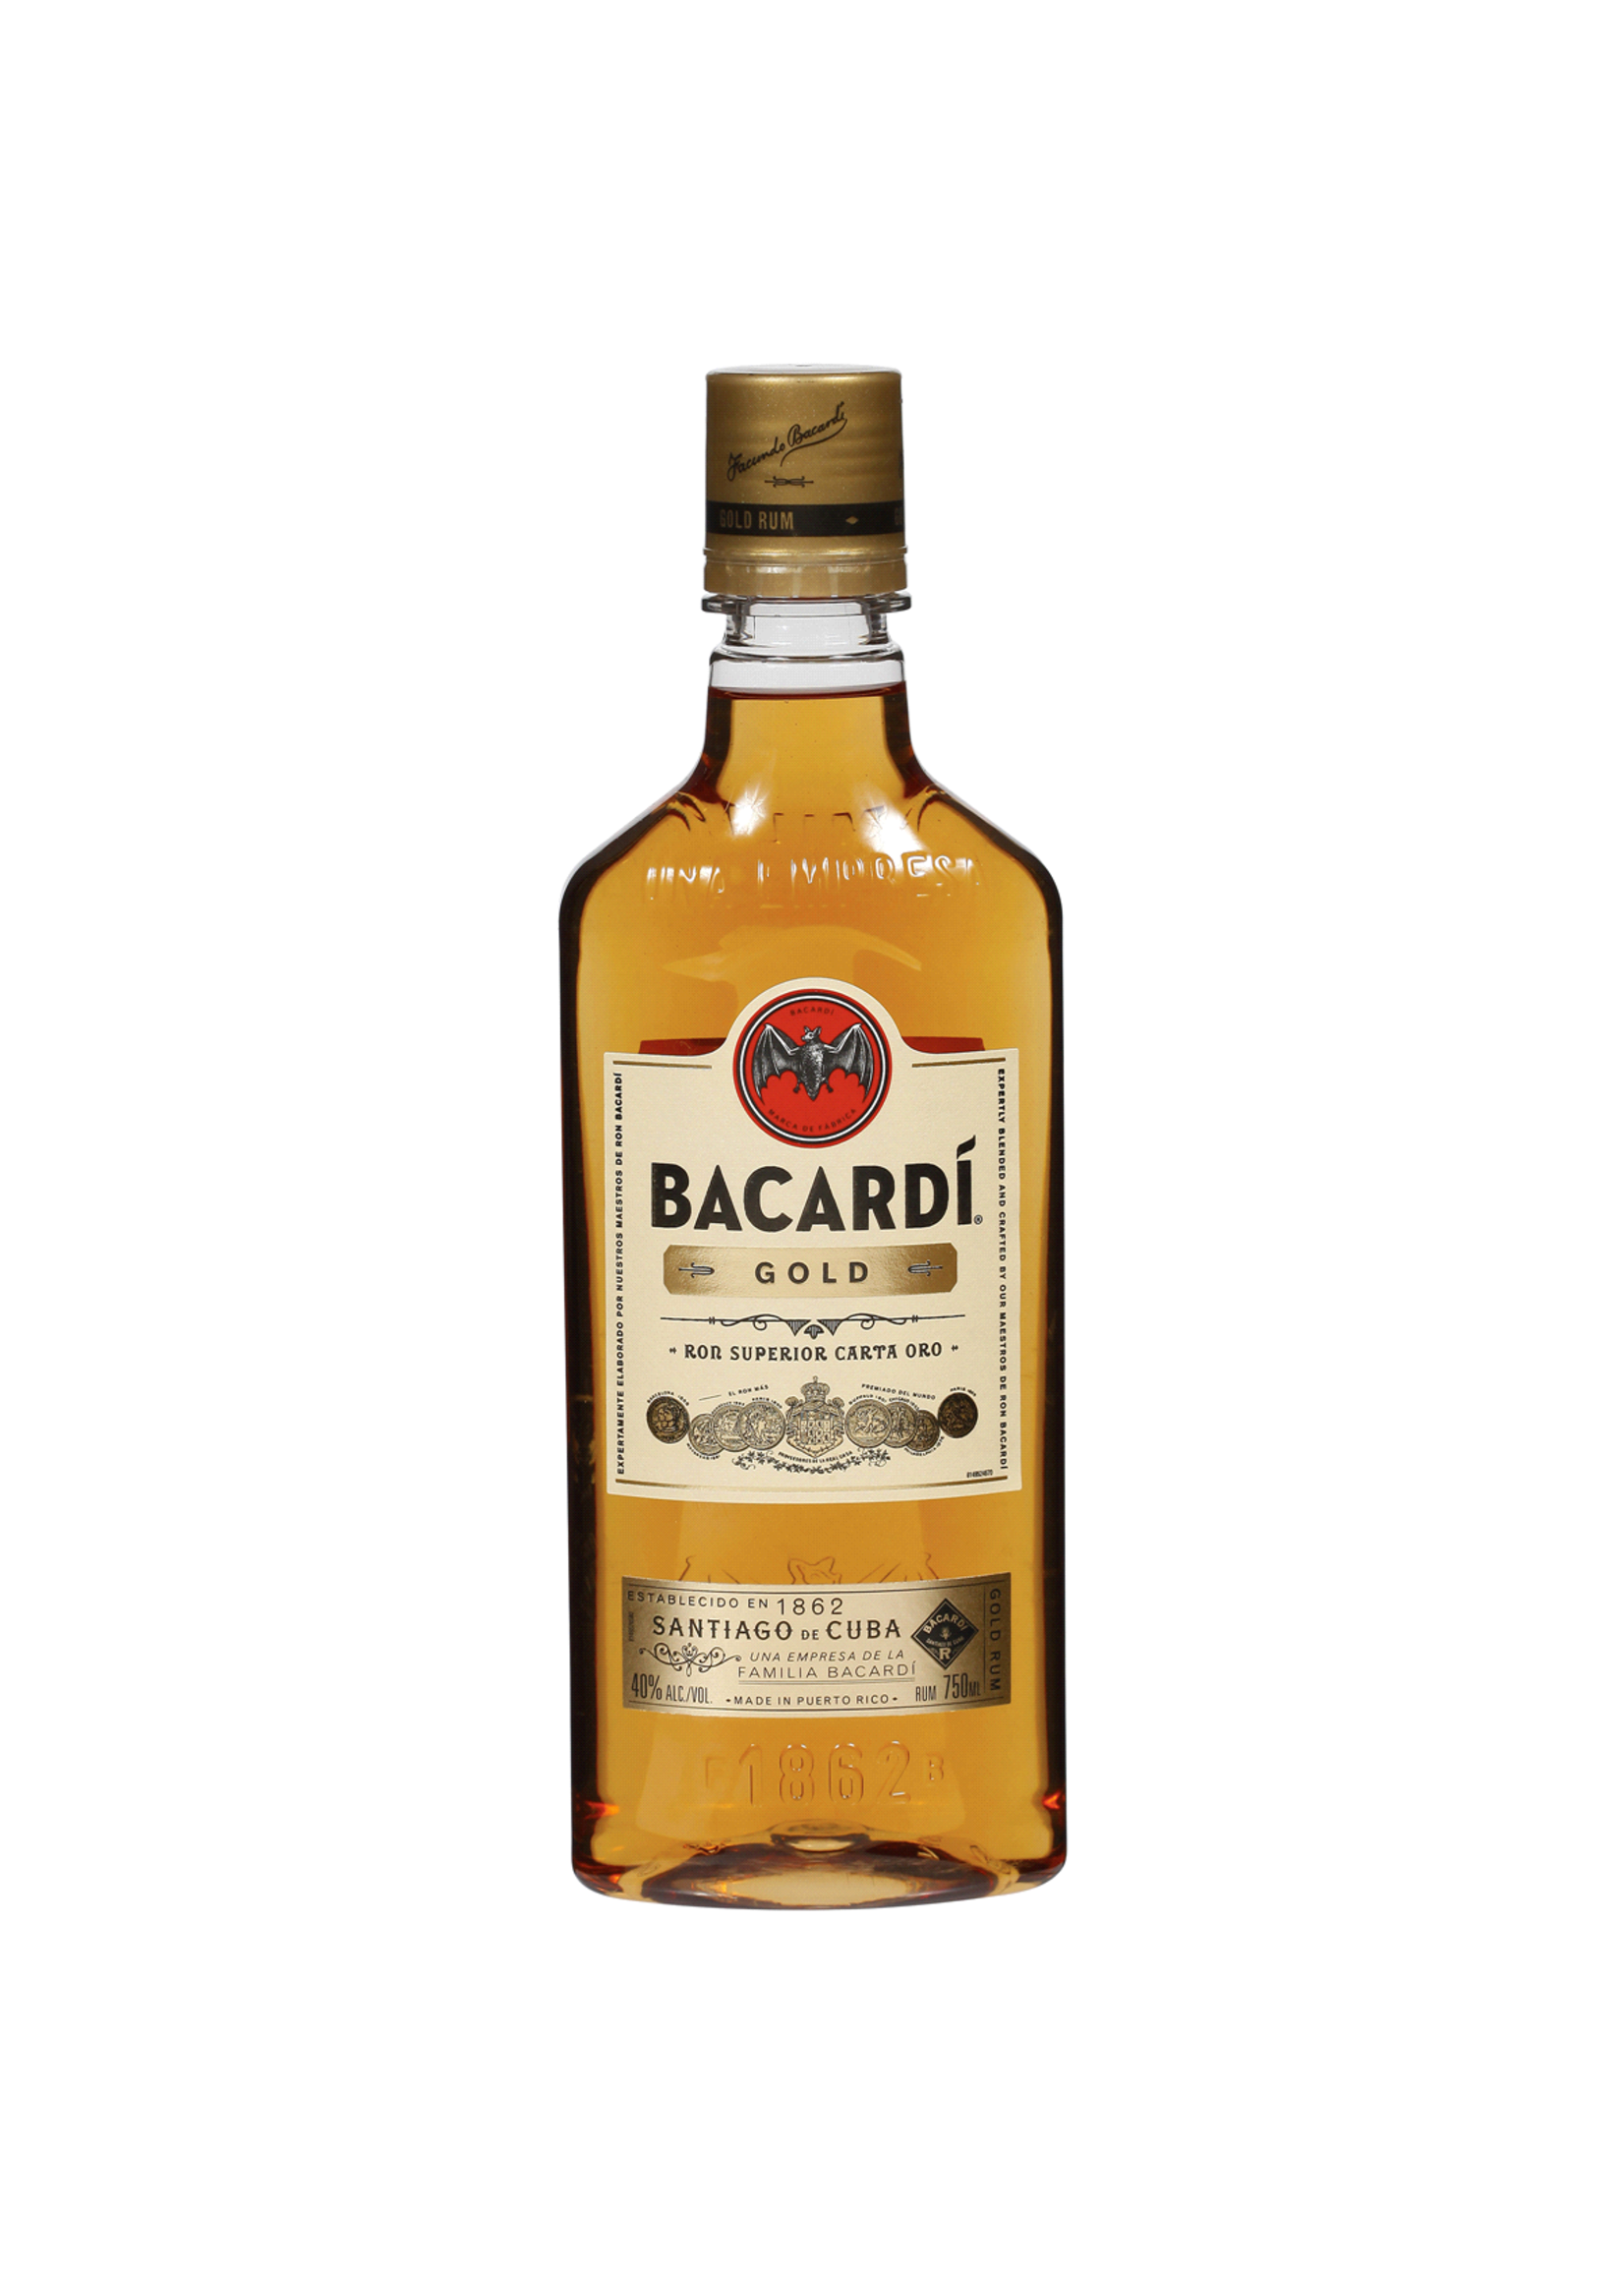 Bacardi Bacardi Gold Rum Pet 80Proof 750ml